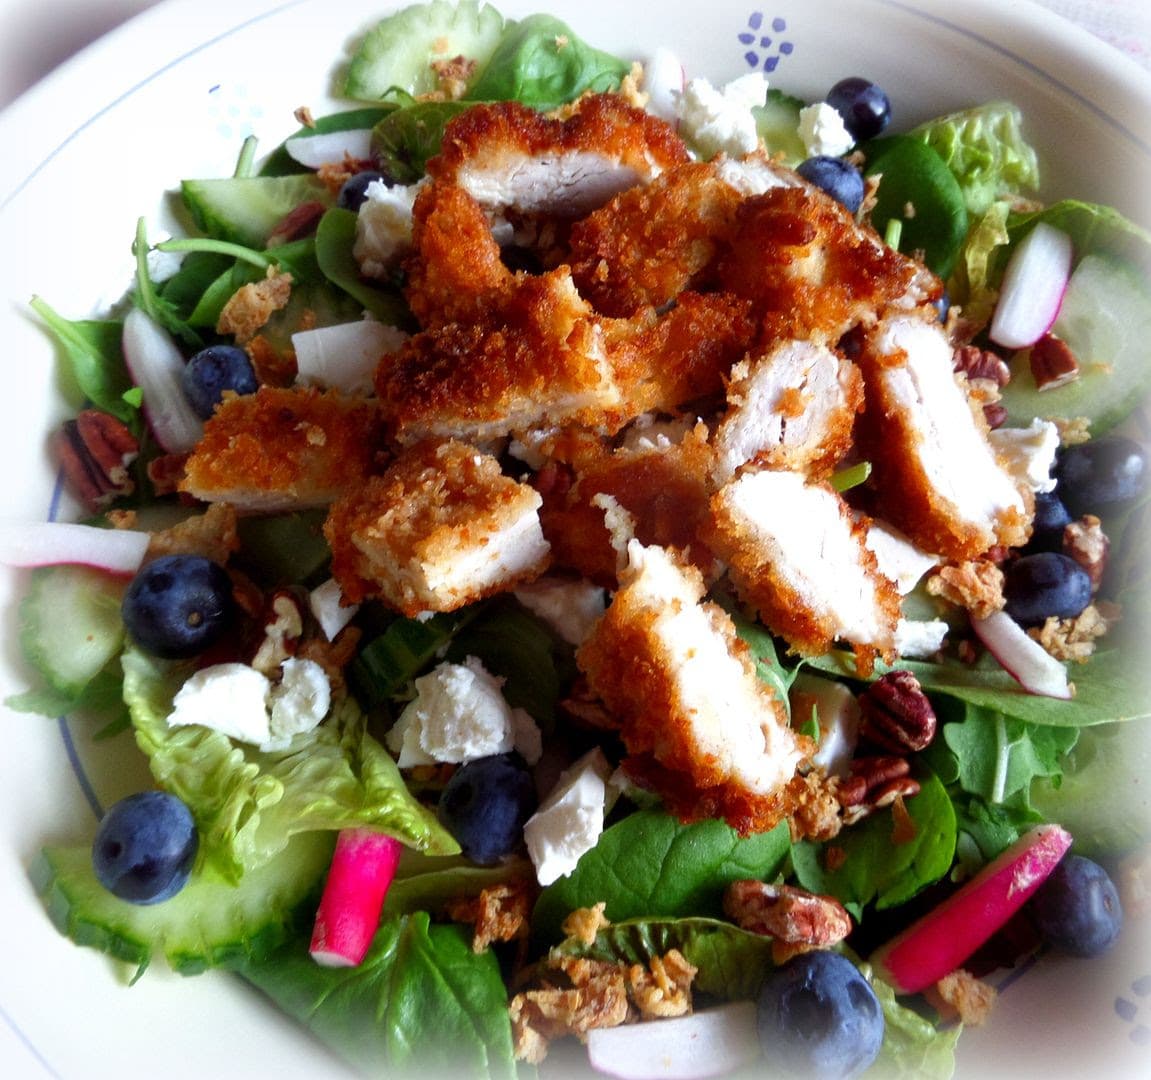 The English Kitchen: Crispy Chicken Salad with a Blueberry Vinaigrette